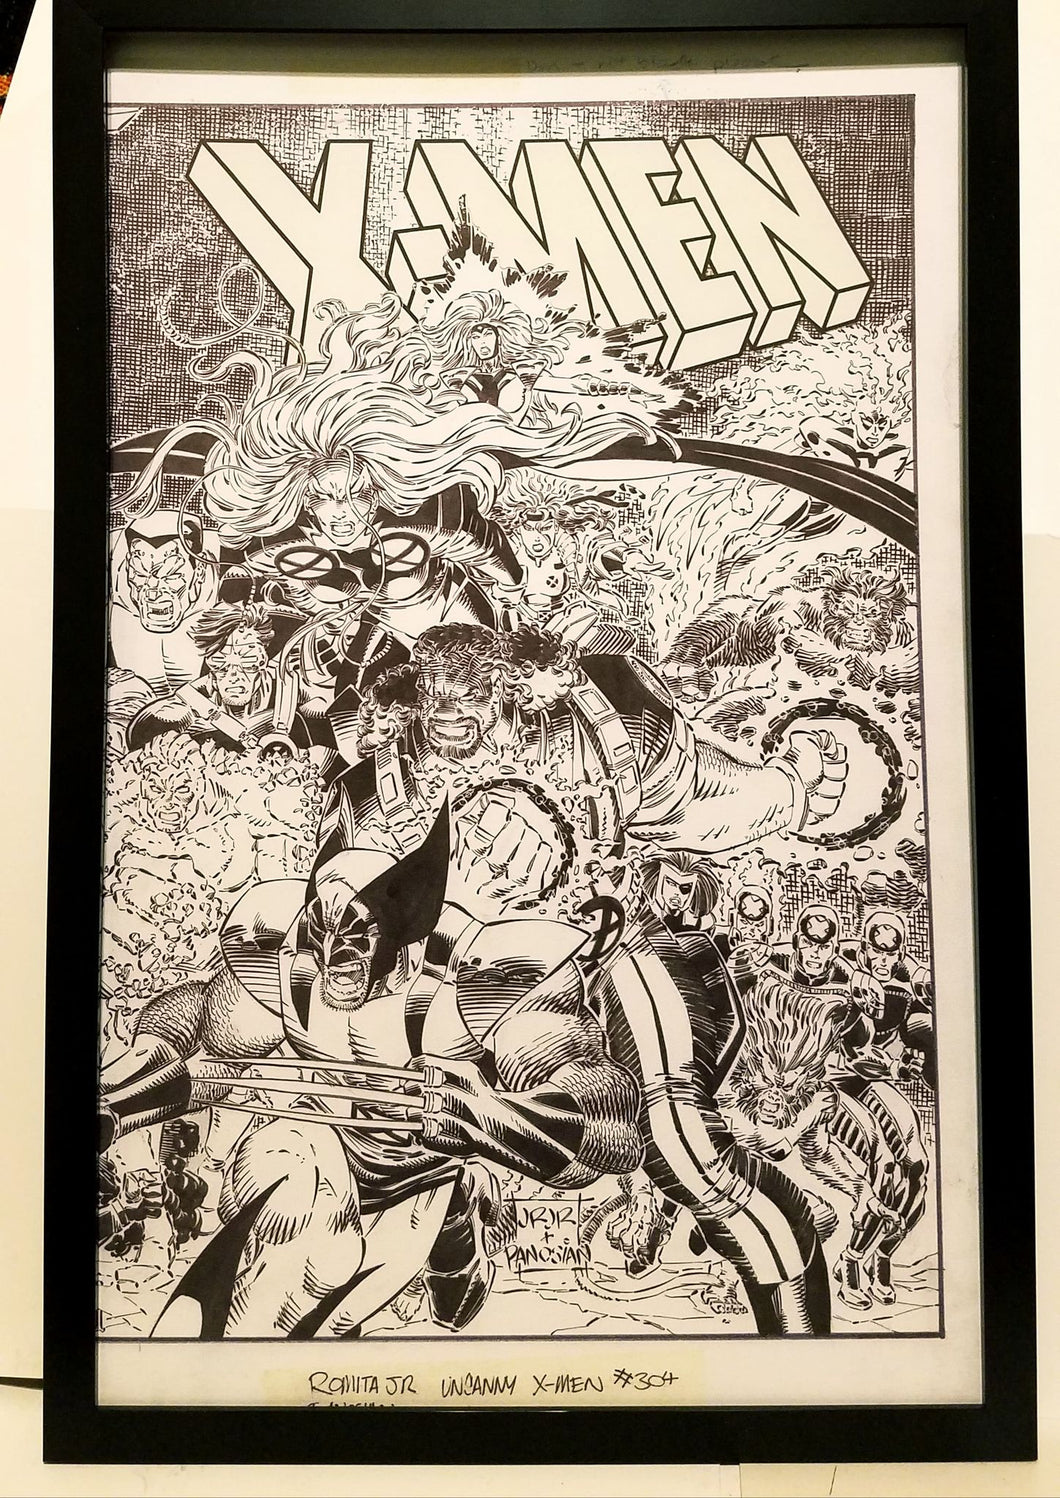 Uncanny X-Men #304 by John Romita Jr 11x17 FRAMED Original Art Poster Marvel Comics